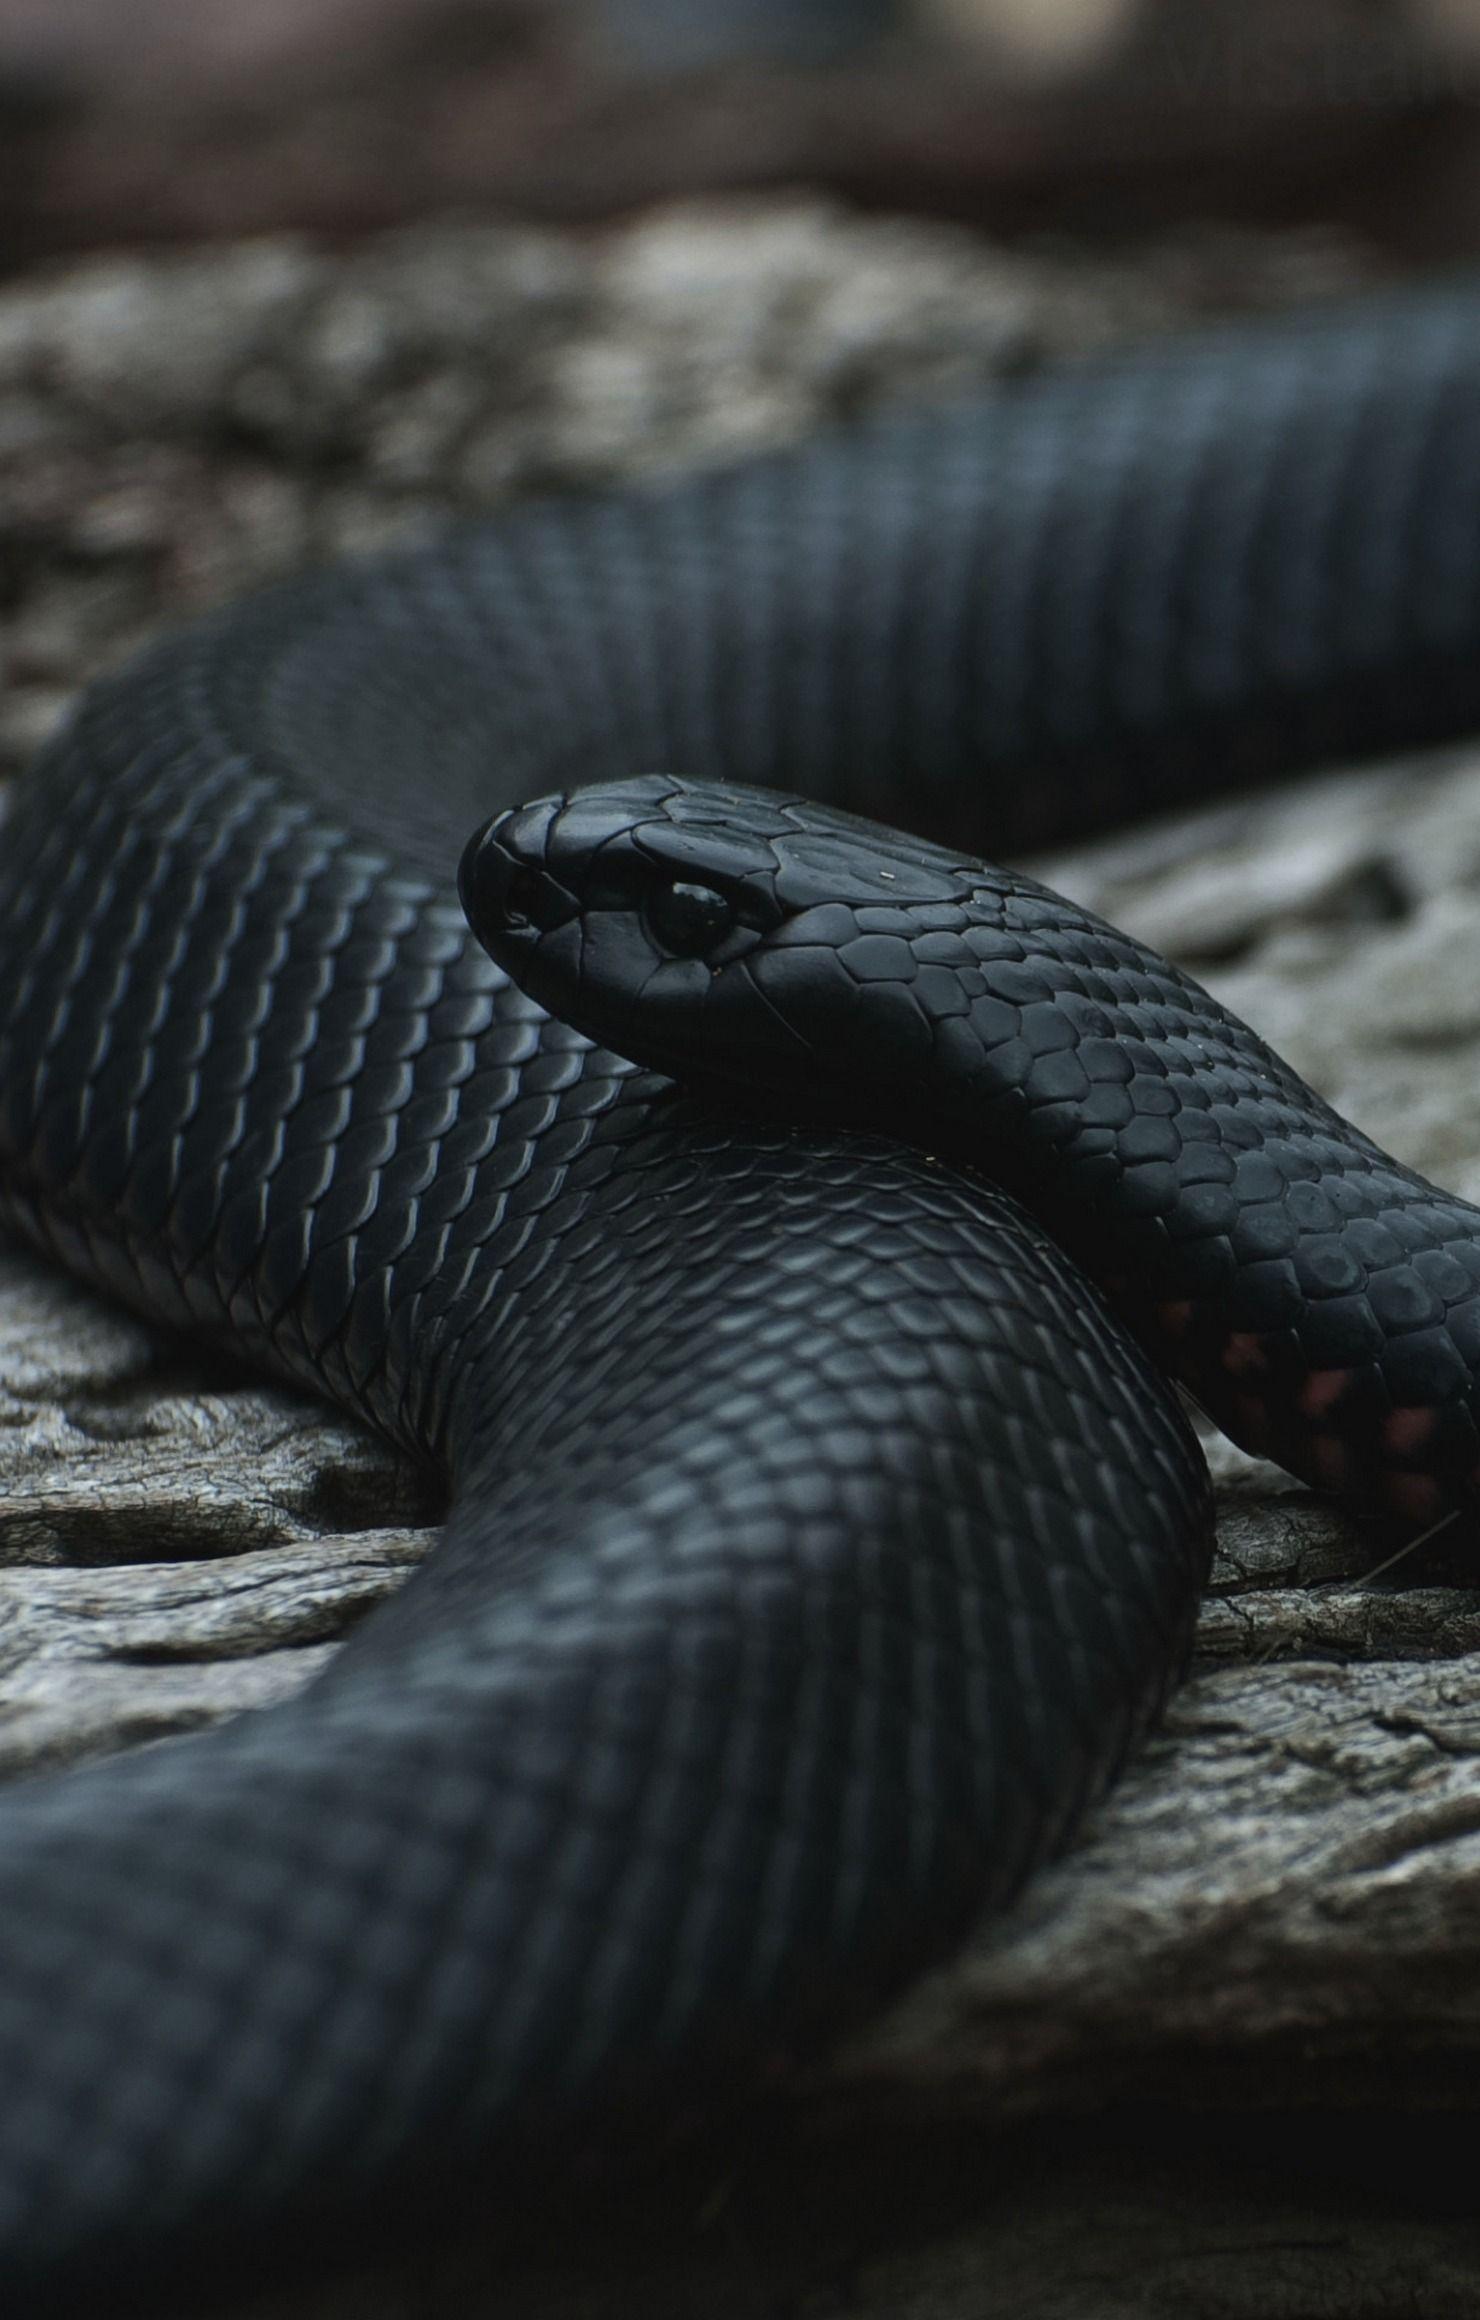 Black Snake HD Wallpapers - Top Free Black Snake HD Backgrounds